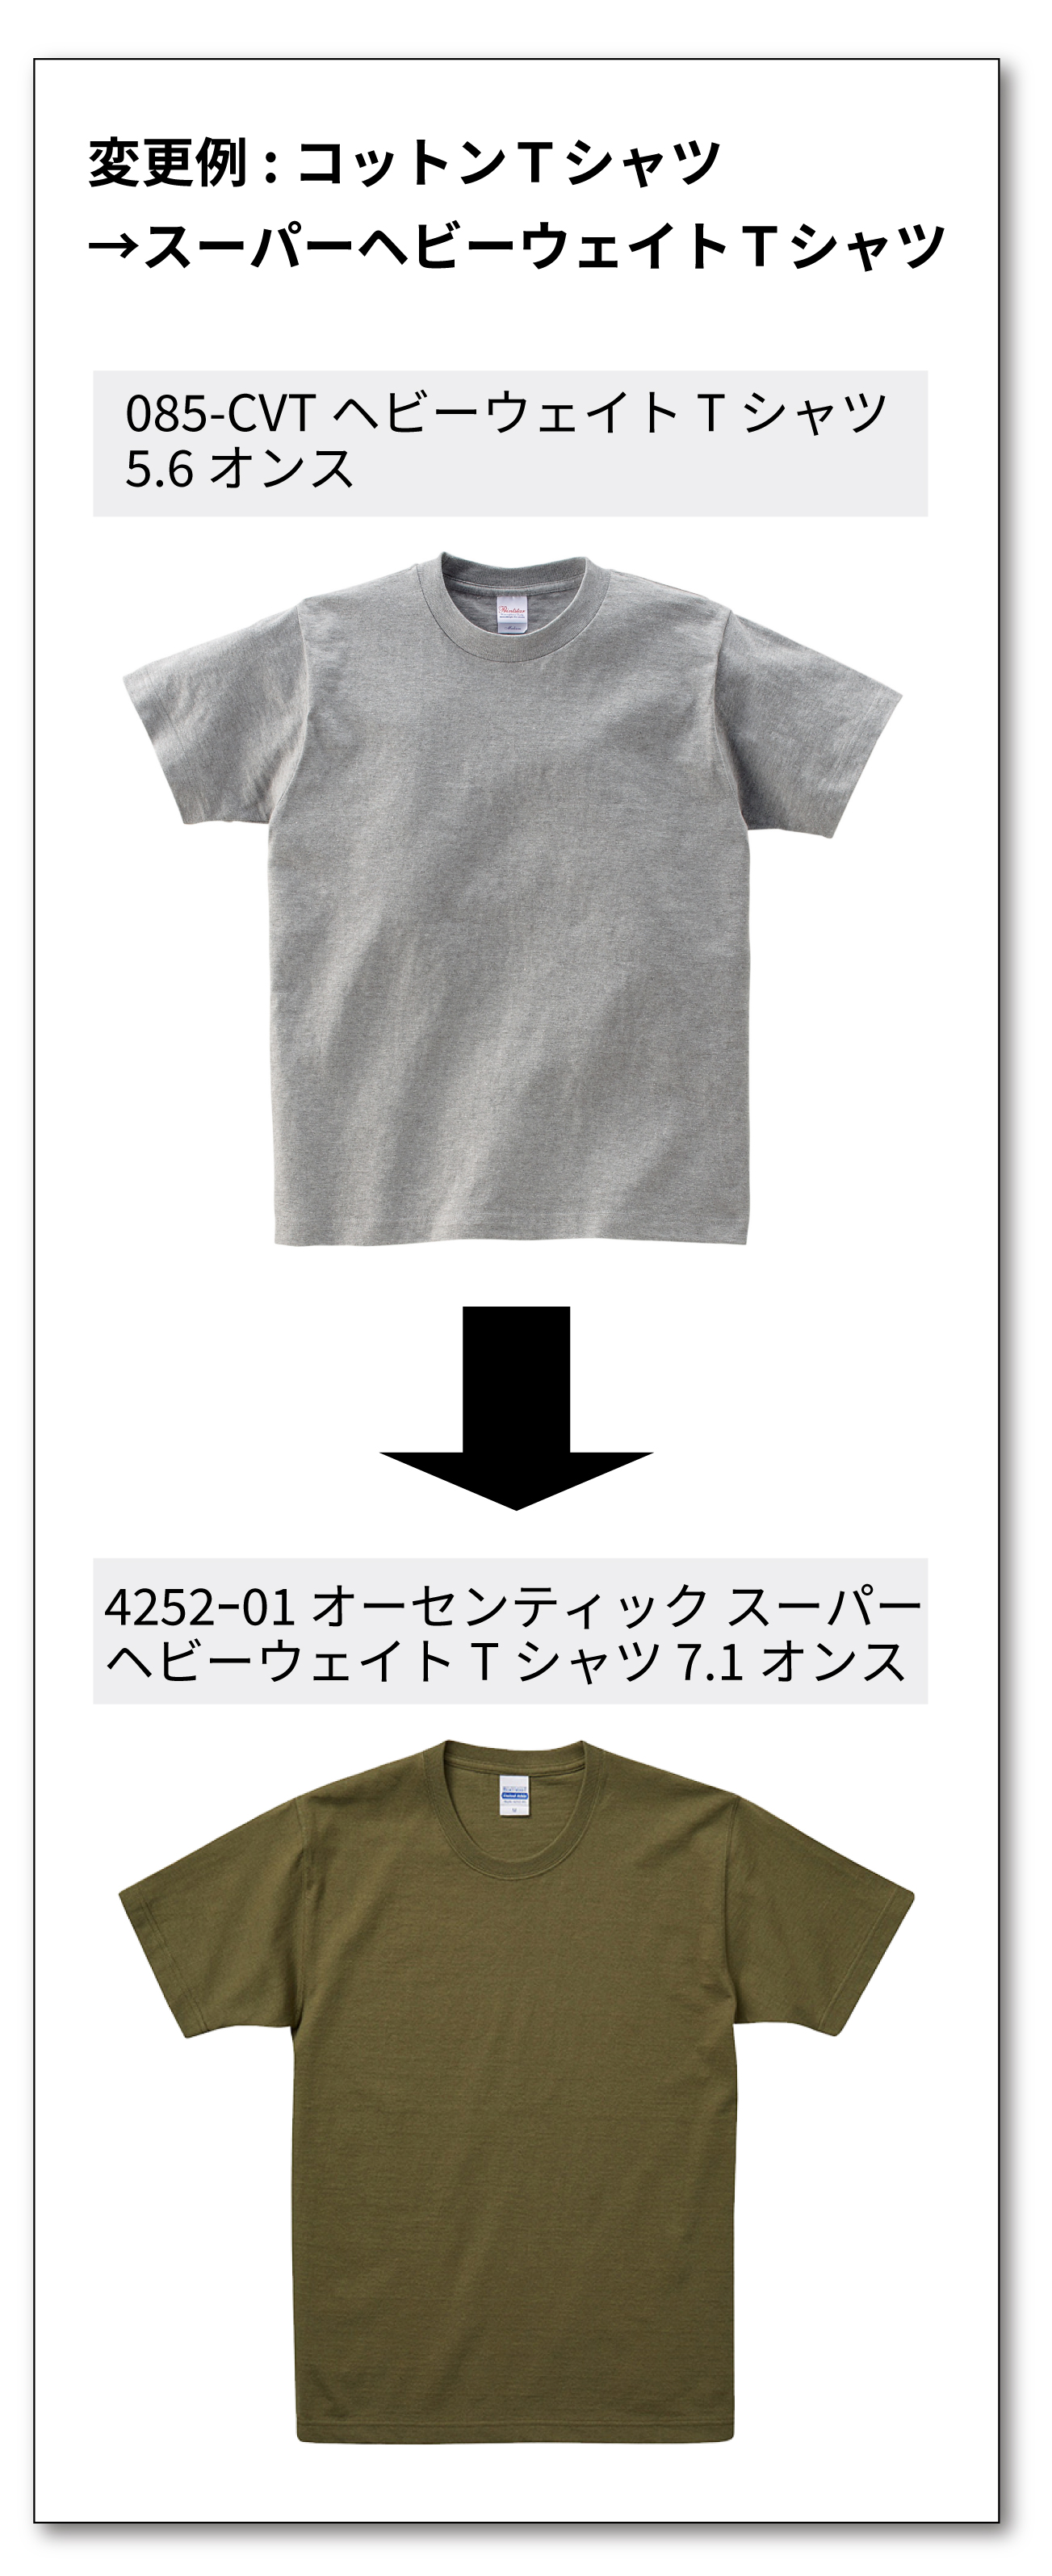 Tシャツ商品乗り換えキャンペーン参考例１モバイル